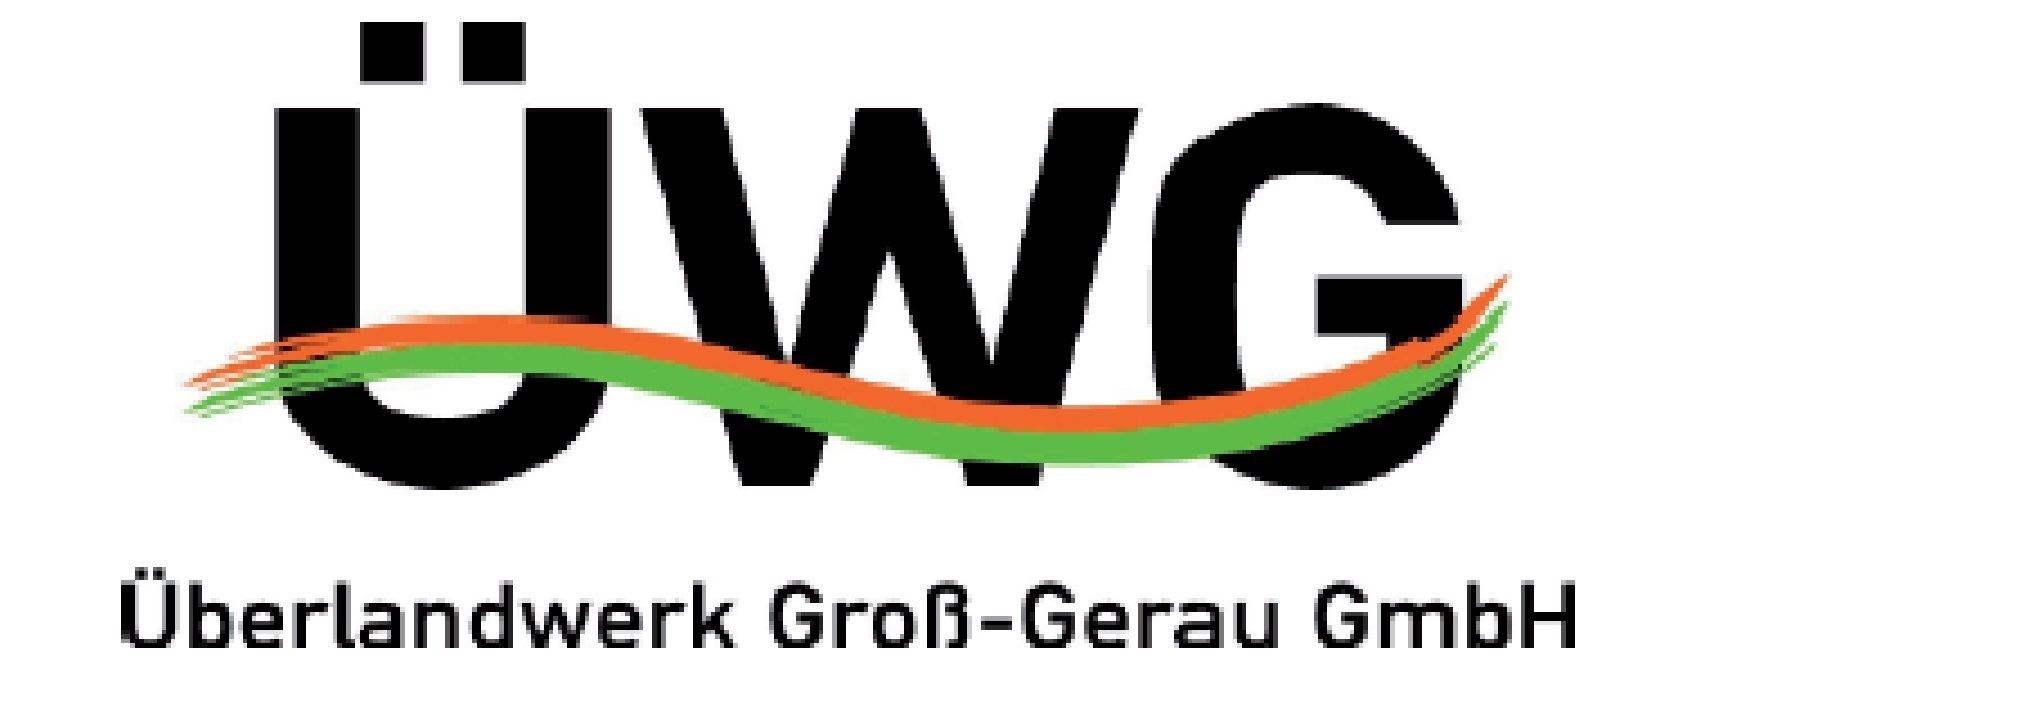 Überlandwerk Groß-Gerau GmbH